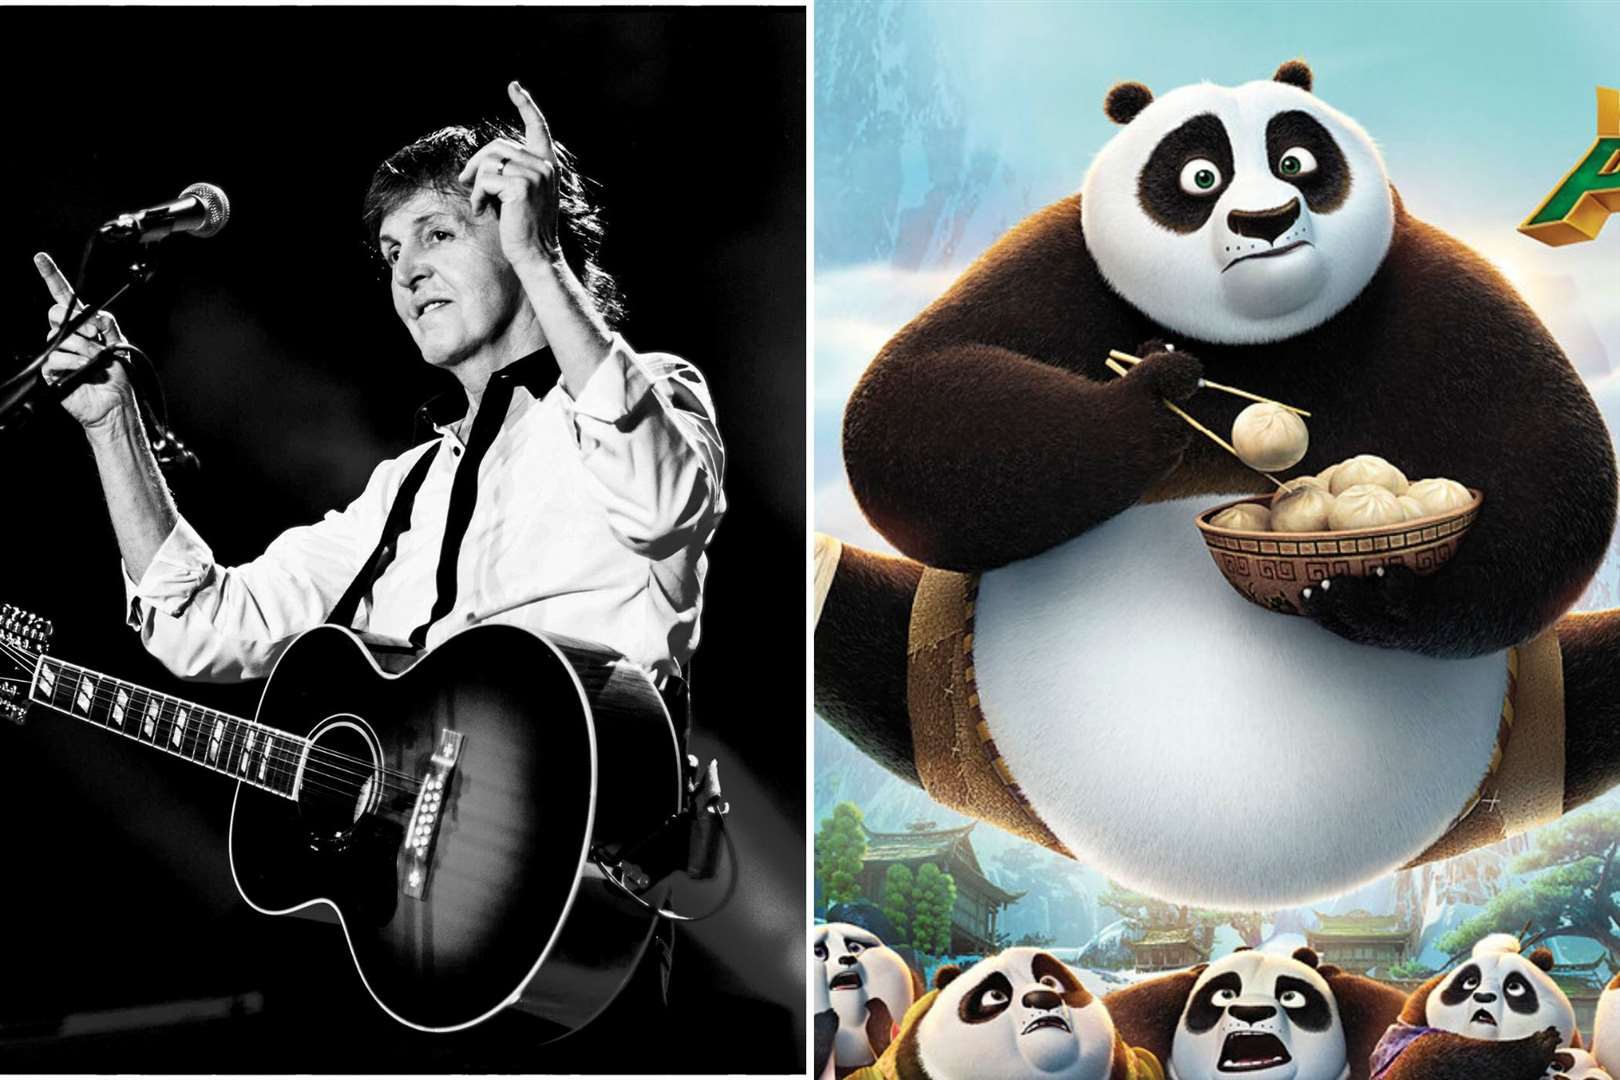 Sir Paul watching Kung Fu Panda must be the most bizarre sighting